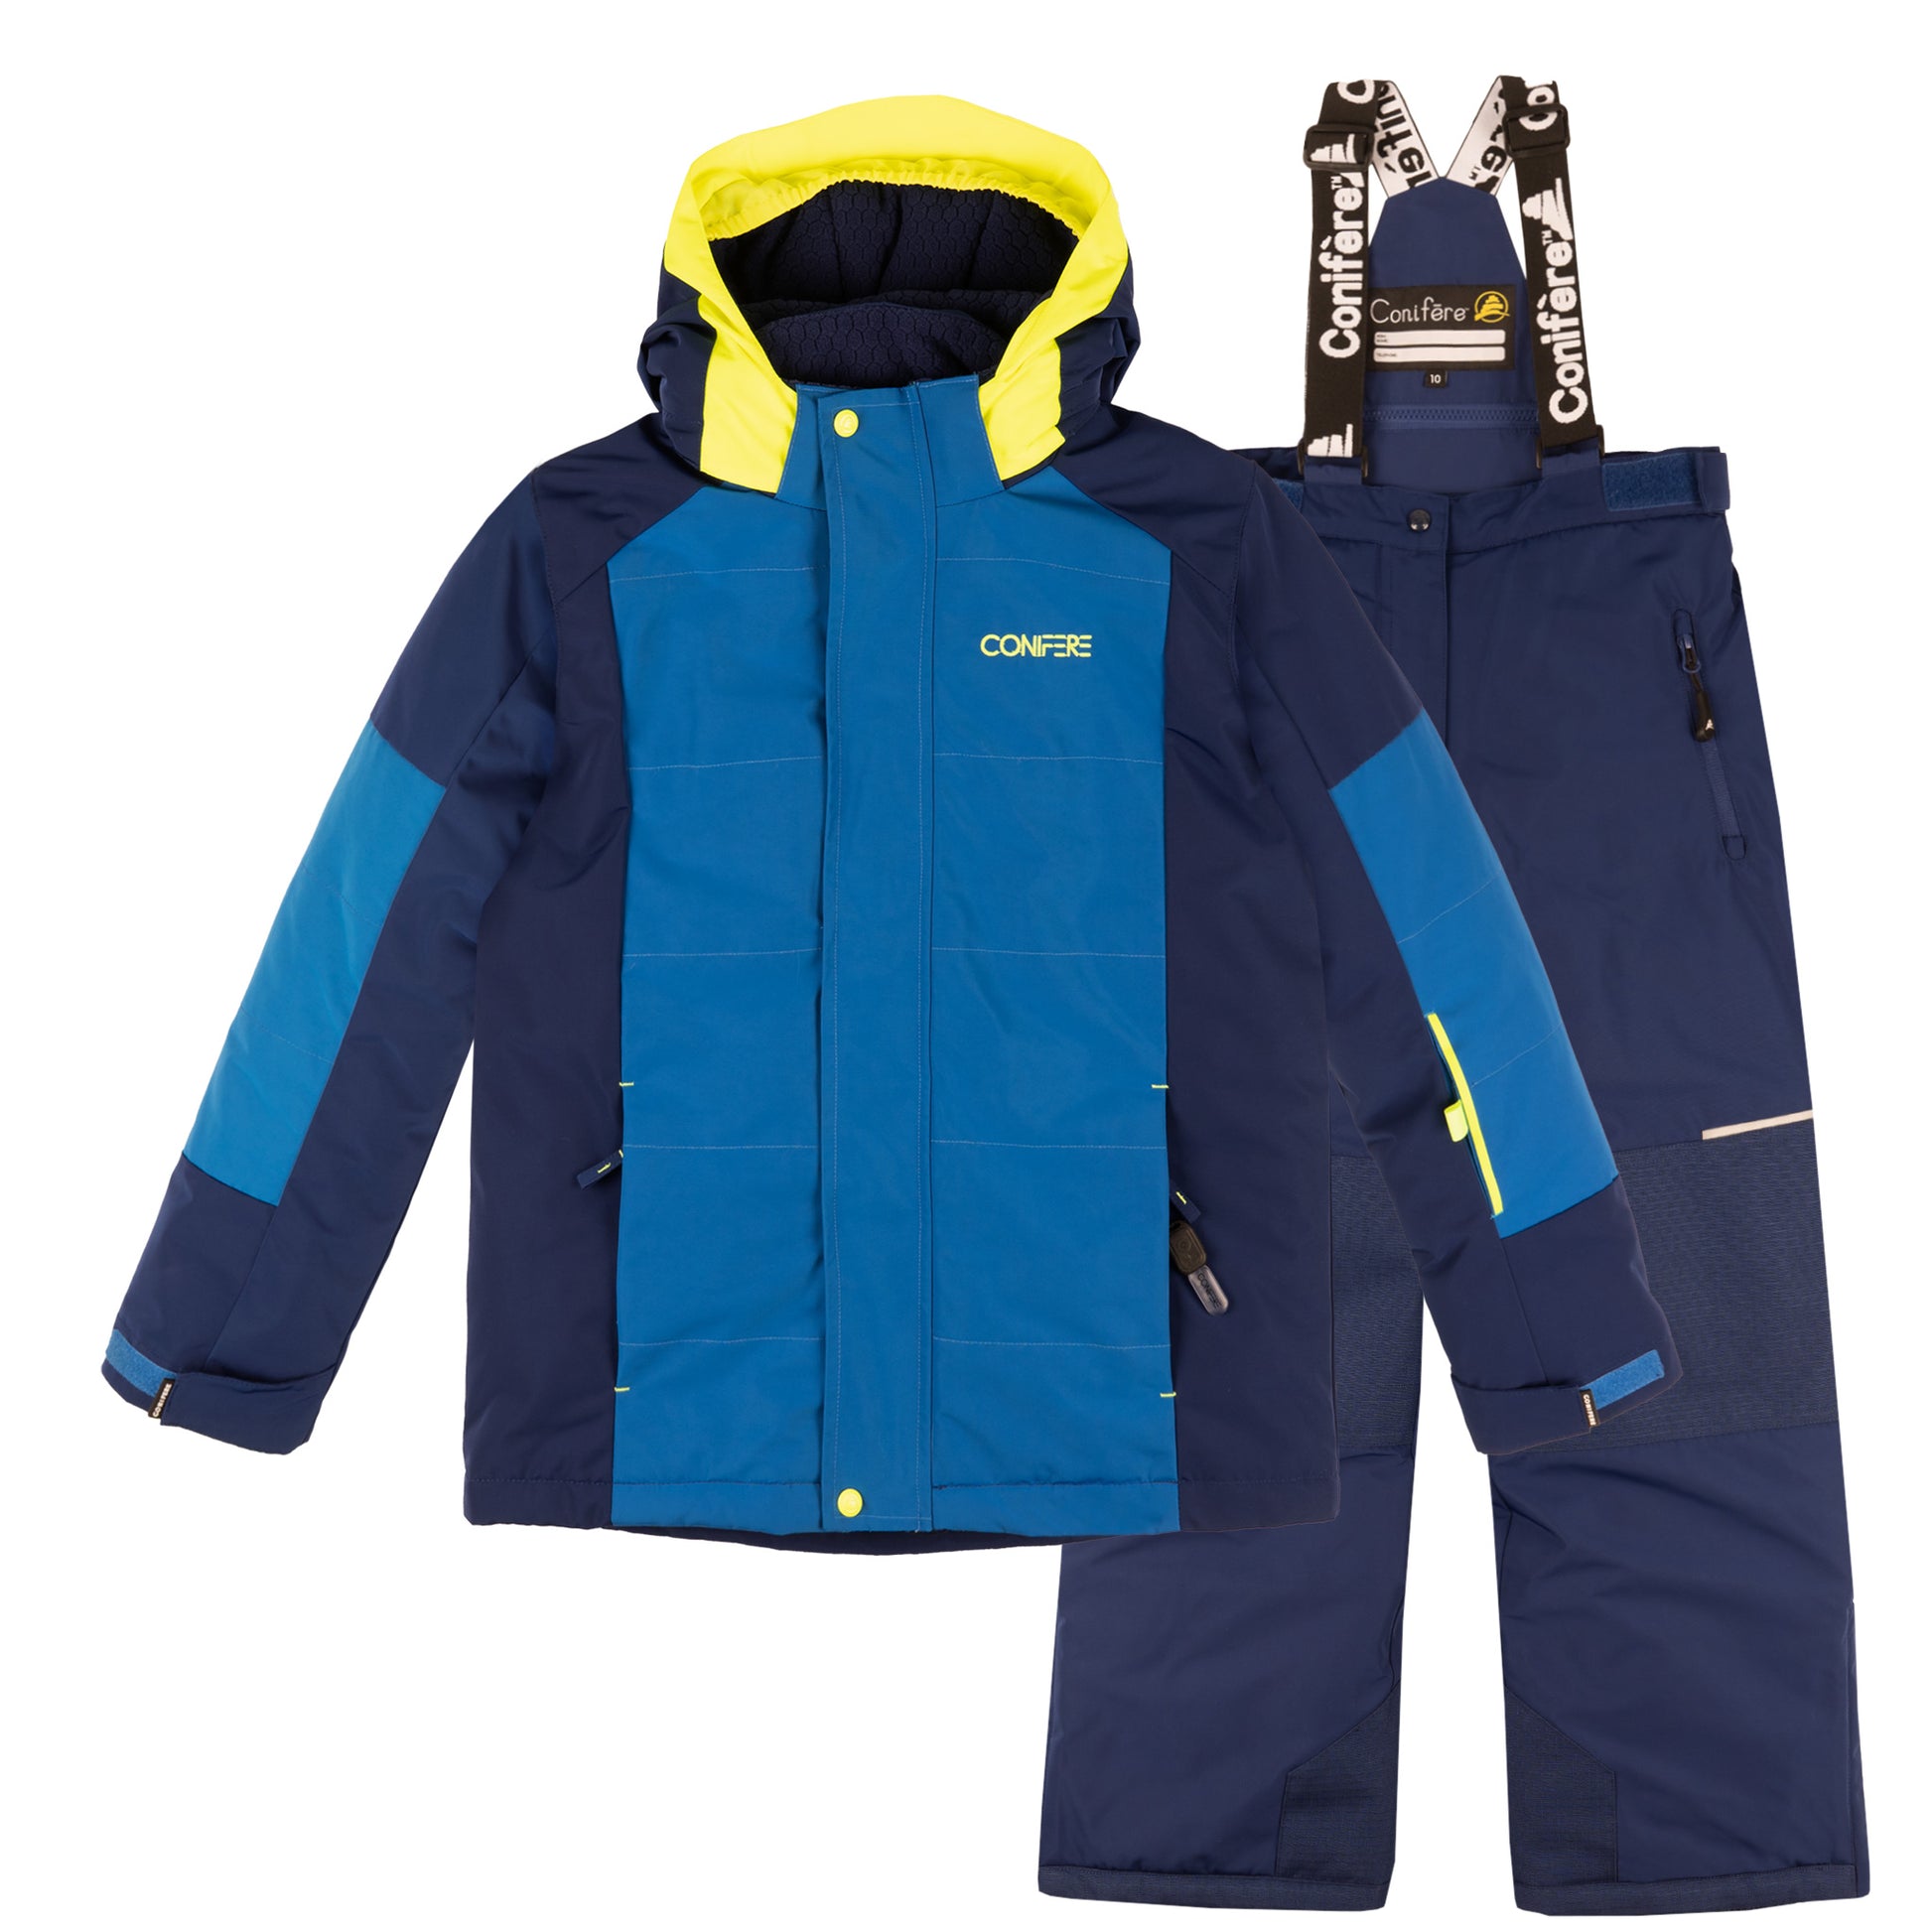 BROCKEN - Boys Royal Blue Snowsuit Set